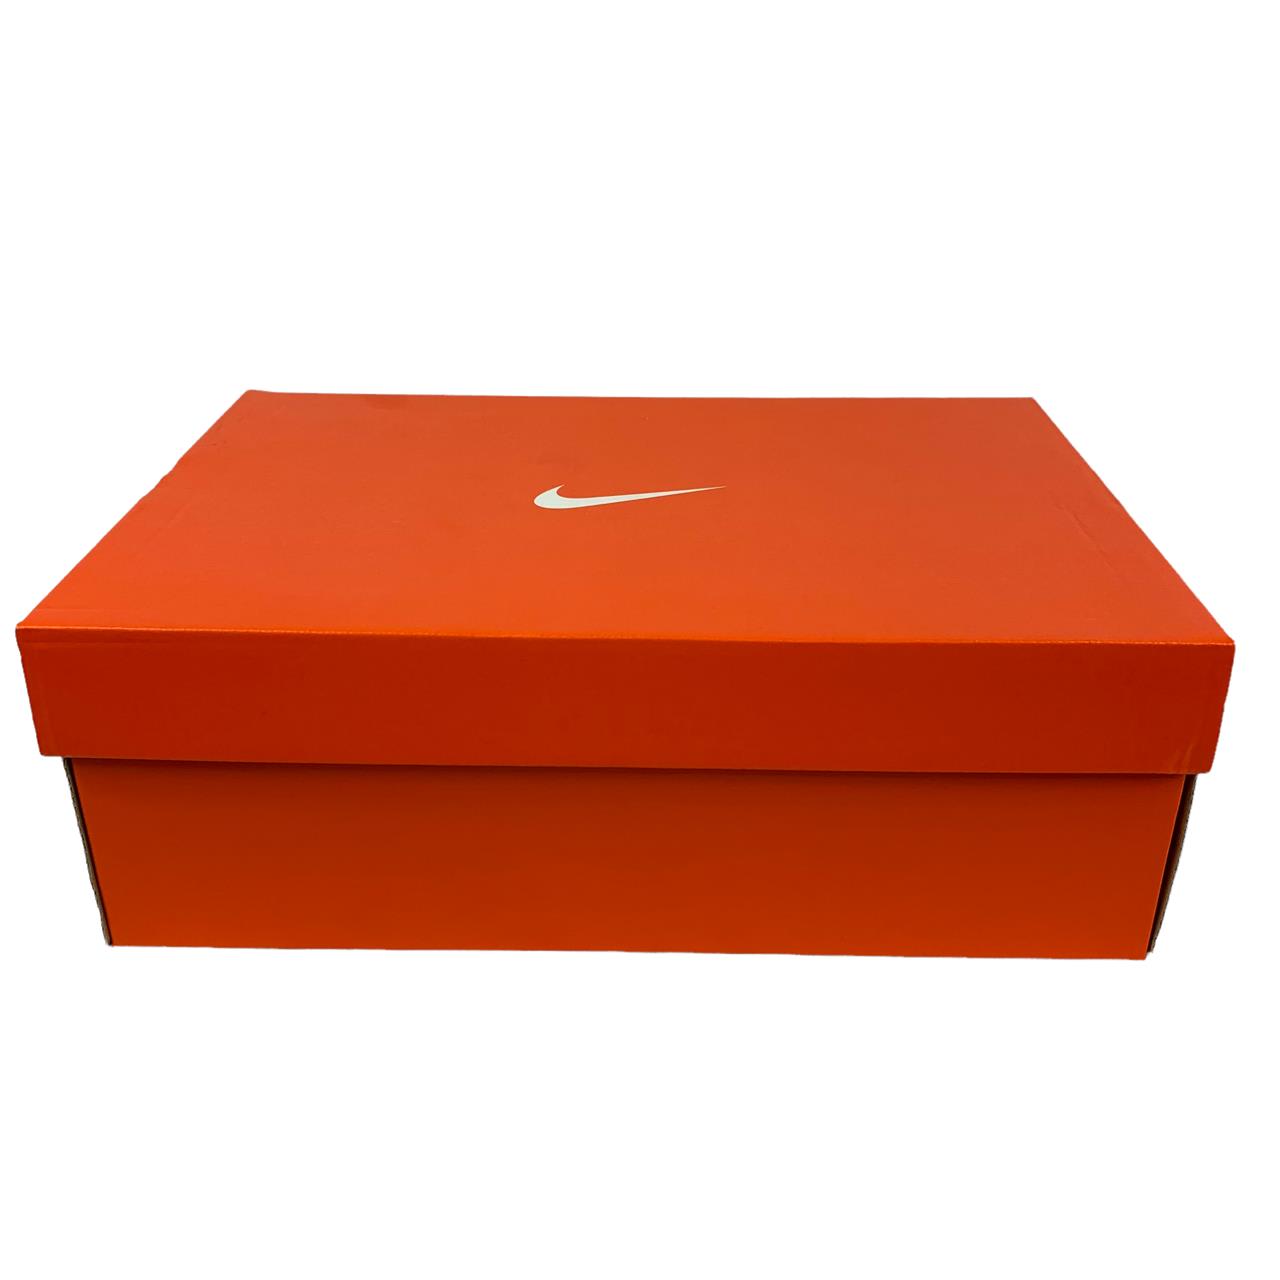 Nike shoes Metcon - Green 4